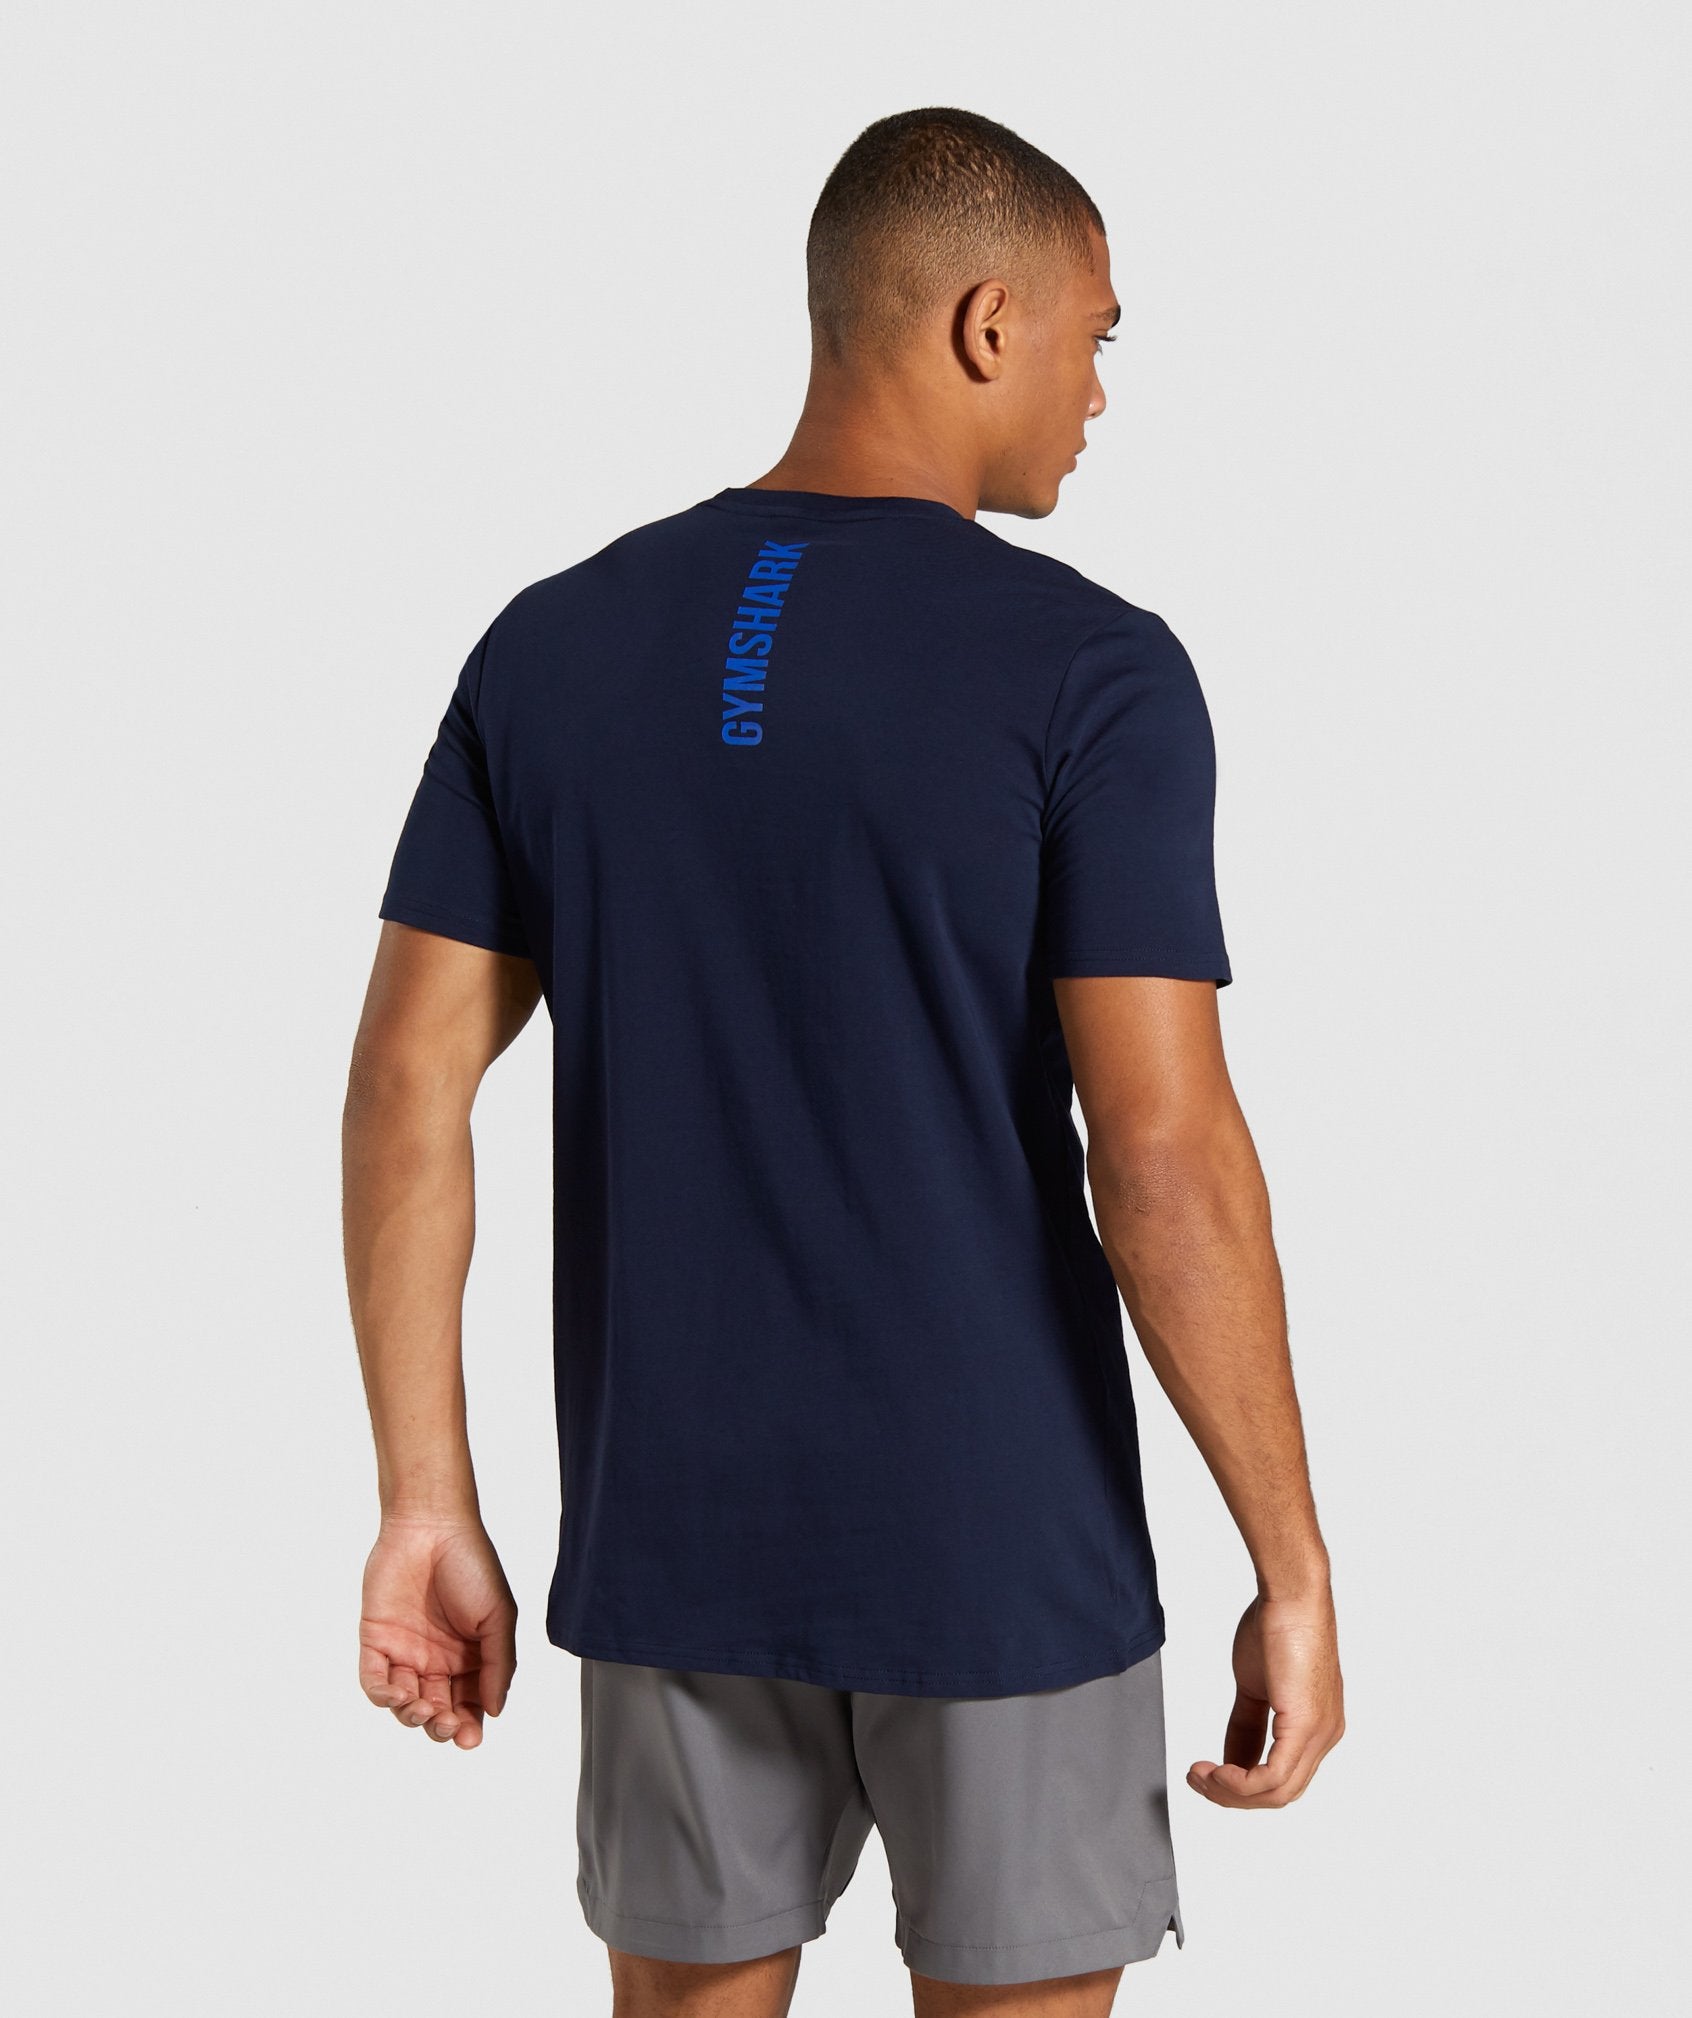 Dimension T-Shirt in Dark Blue - view 2